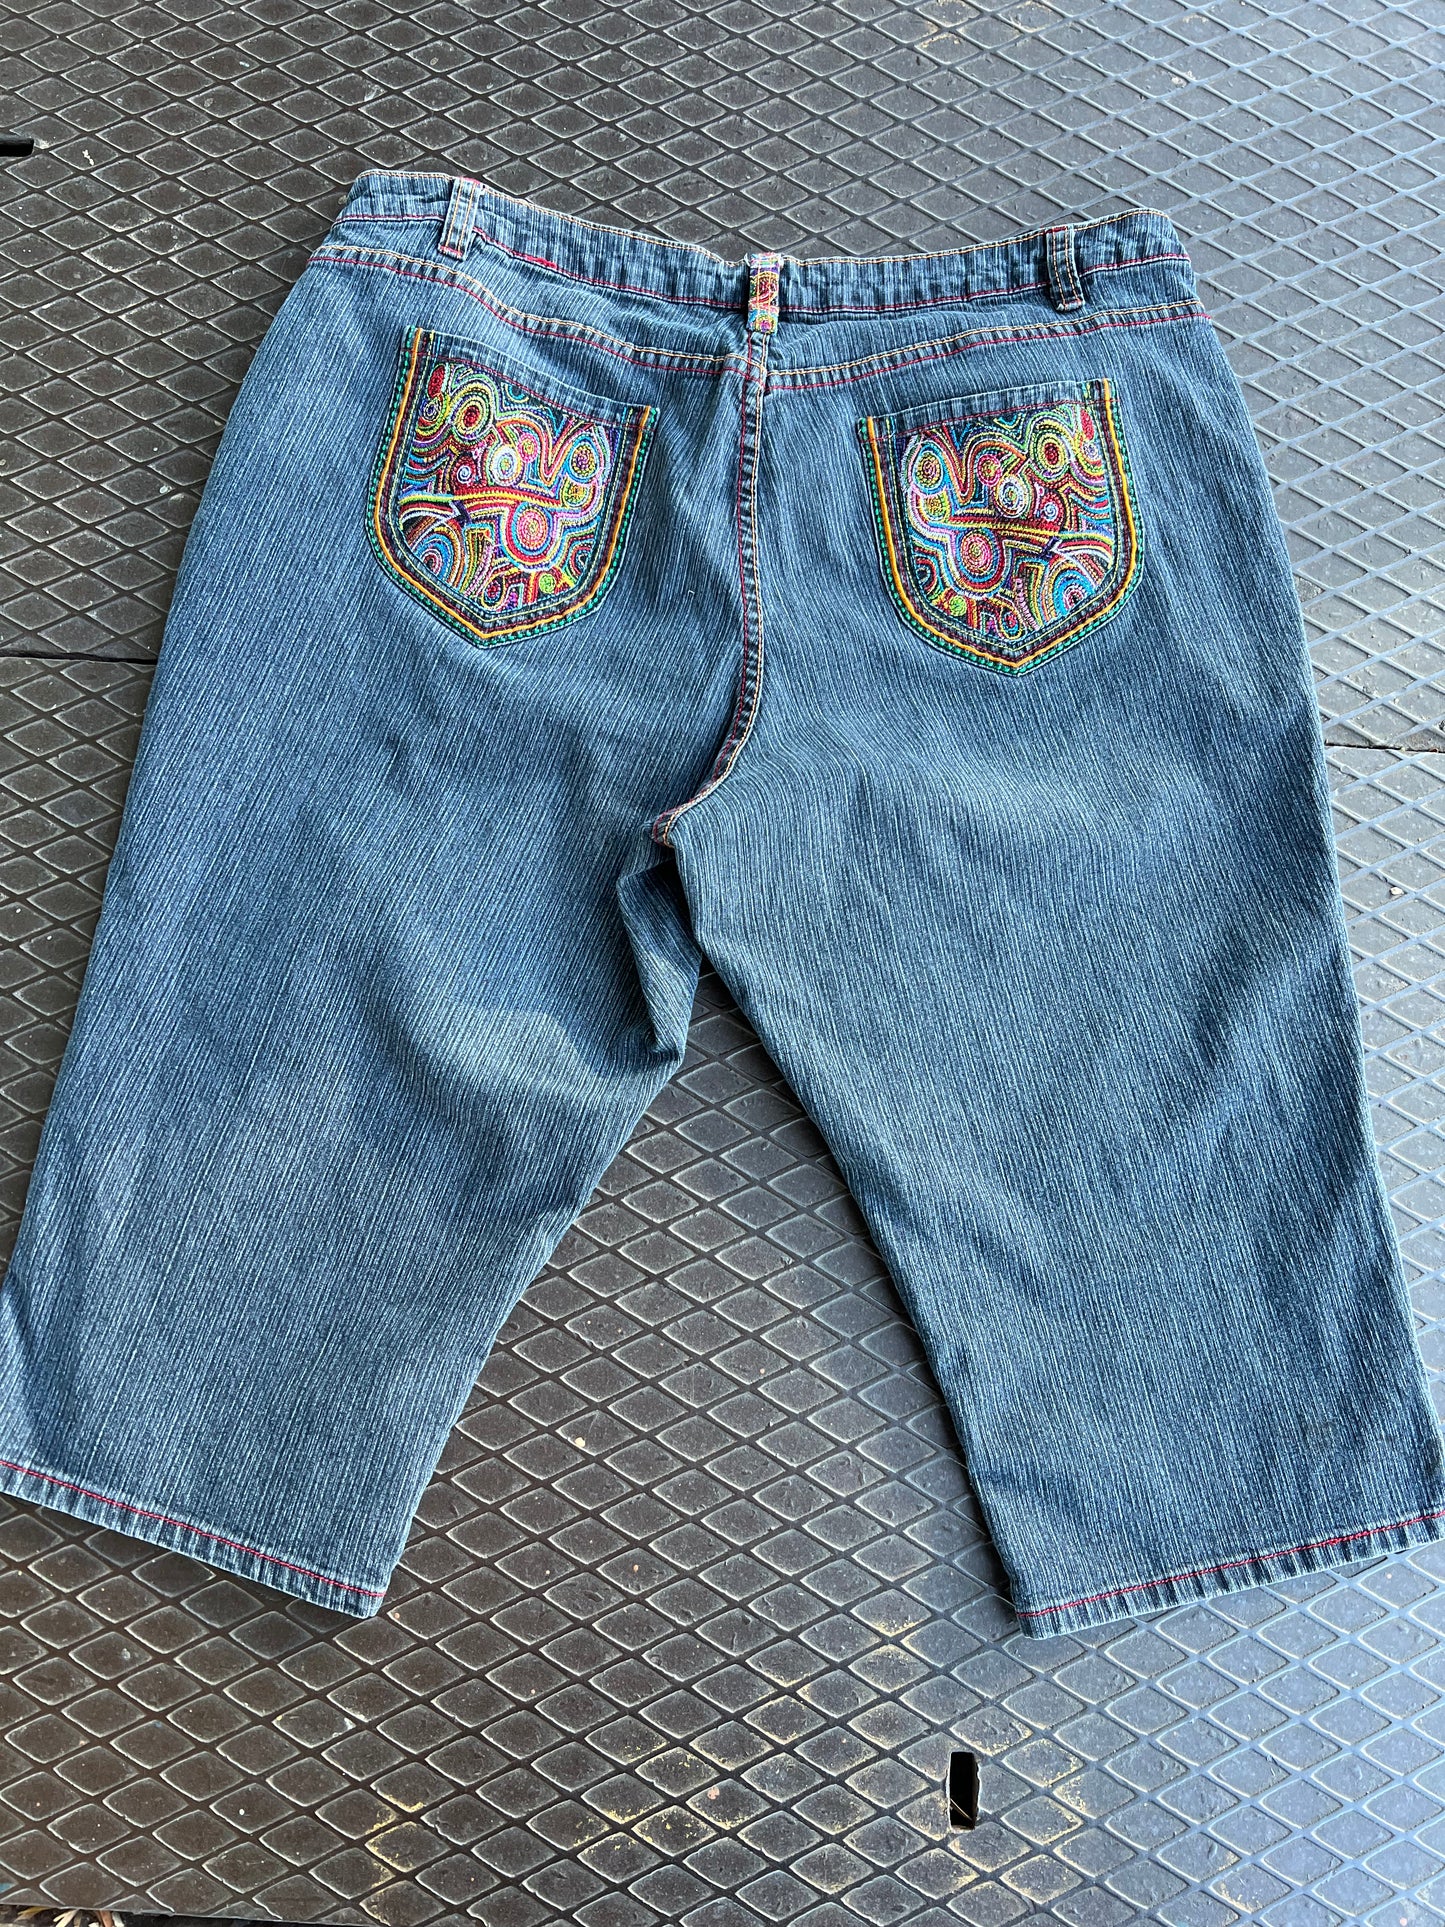 40 - Brighton Blues Rainbow Embroidered Shorts